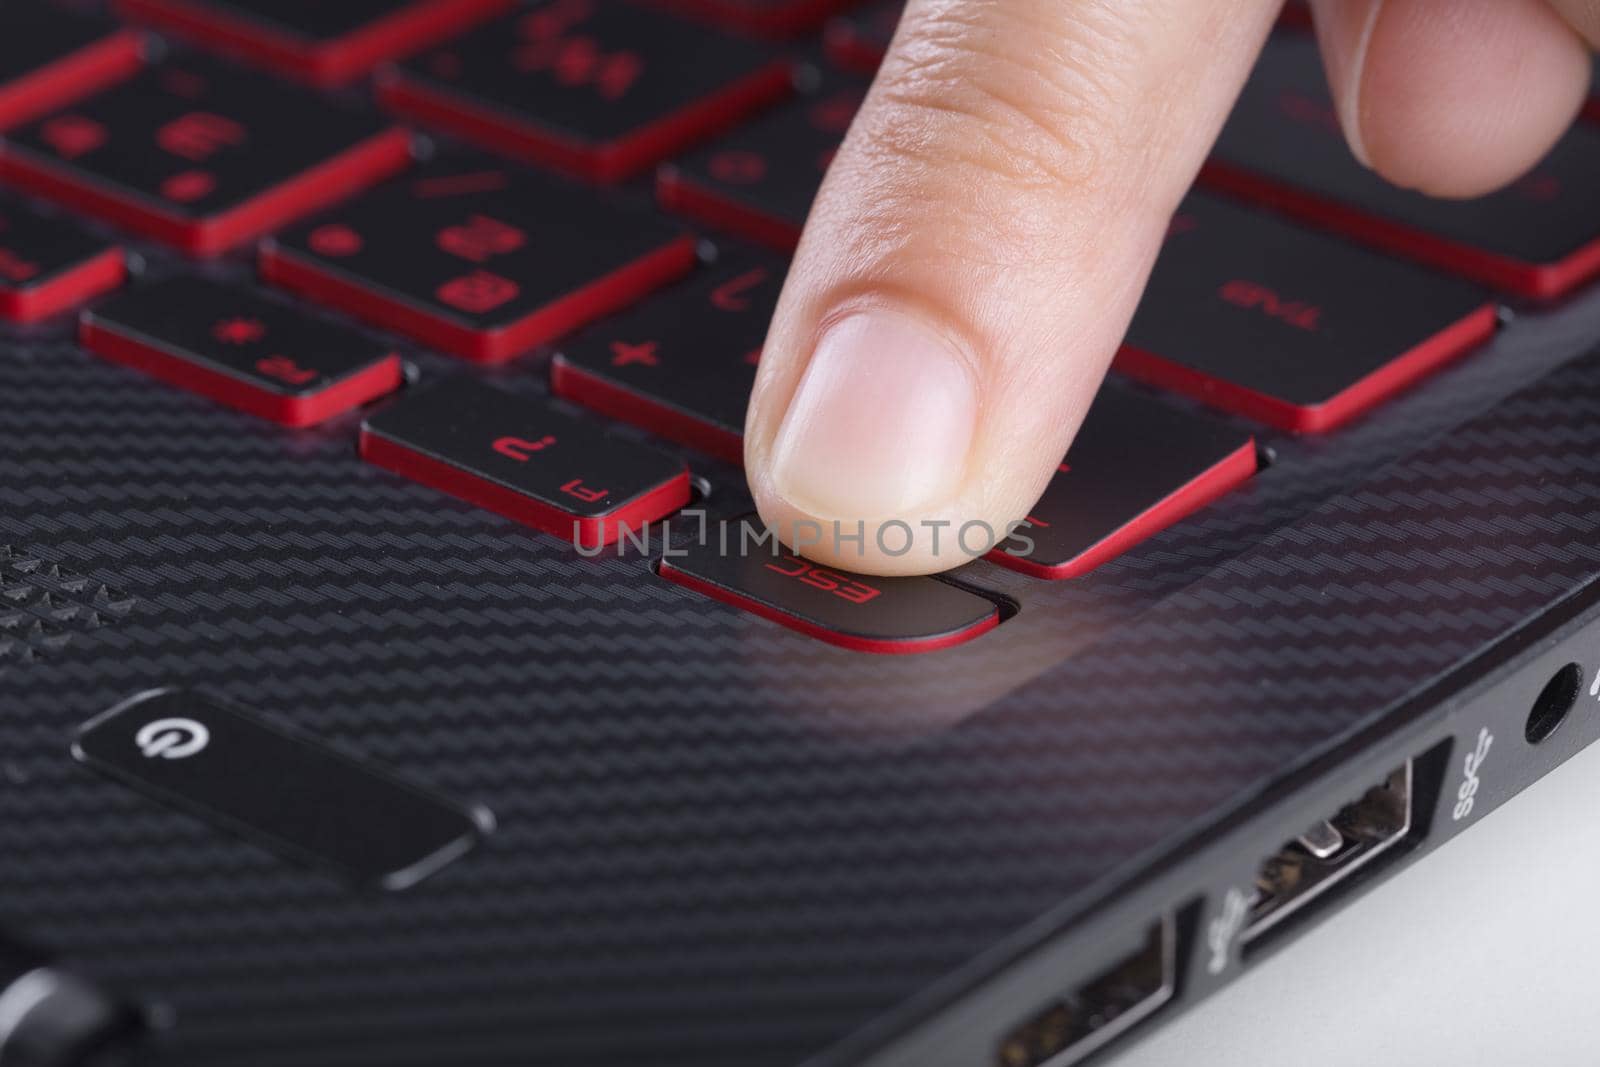 finger pushing esc button on a laptop keyboard